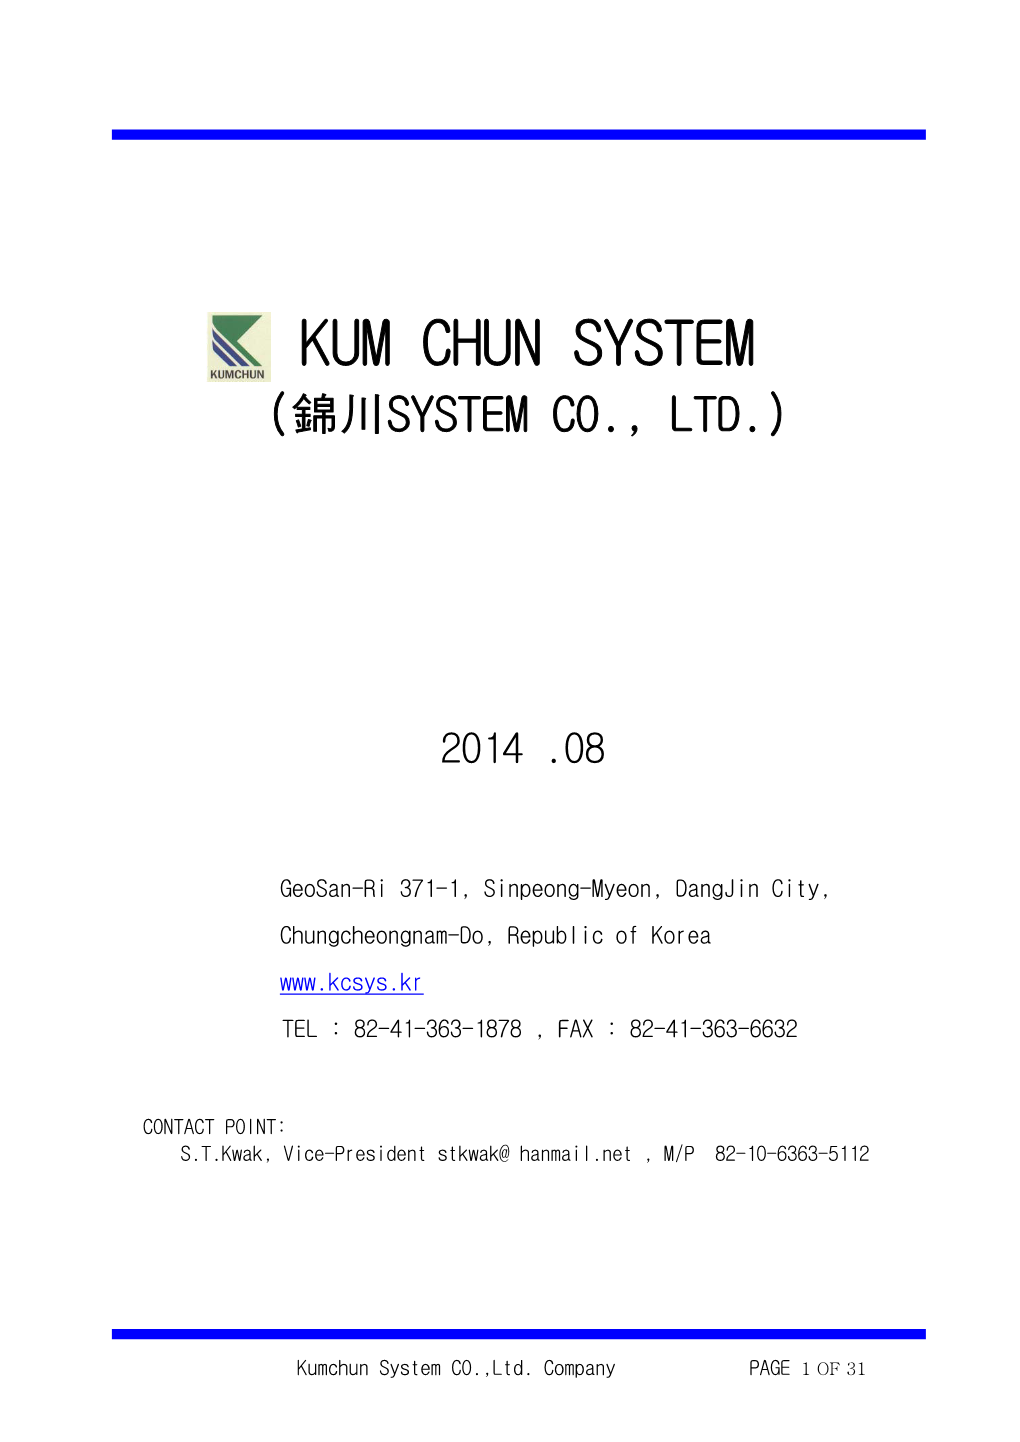 Kum Chun System (錦川system Co., Ltd.)